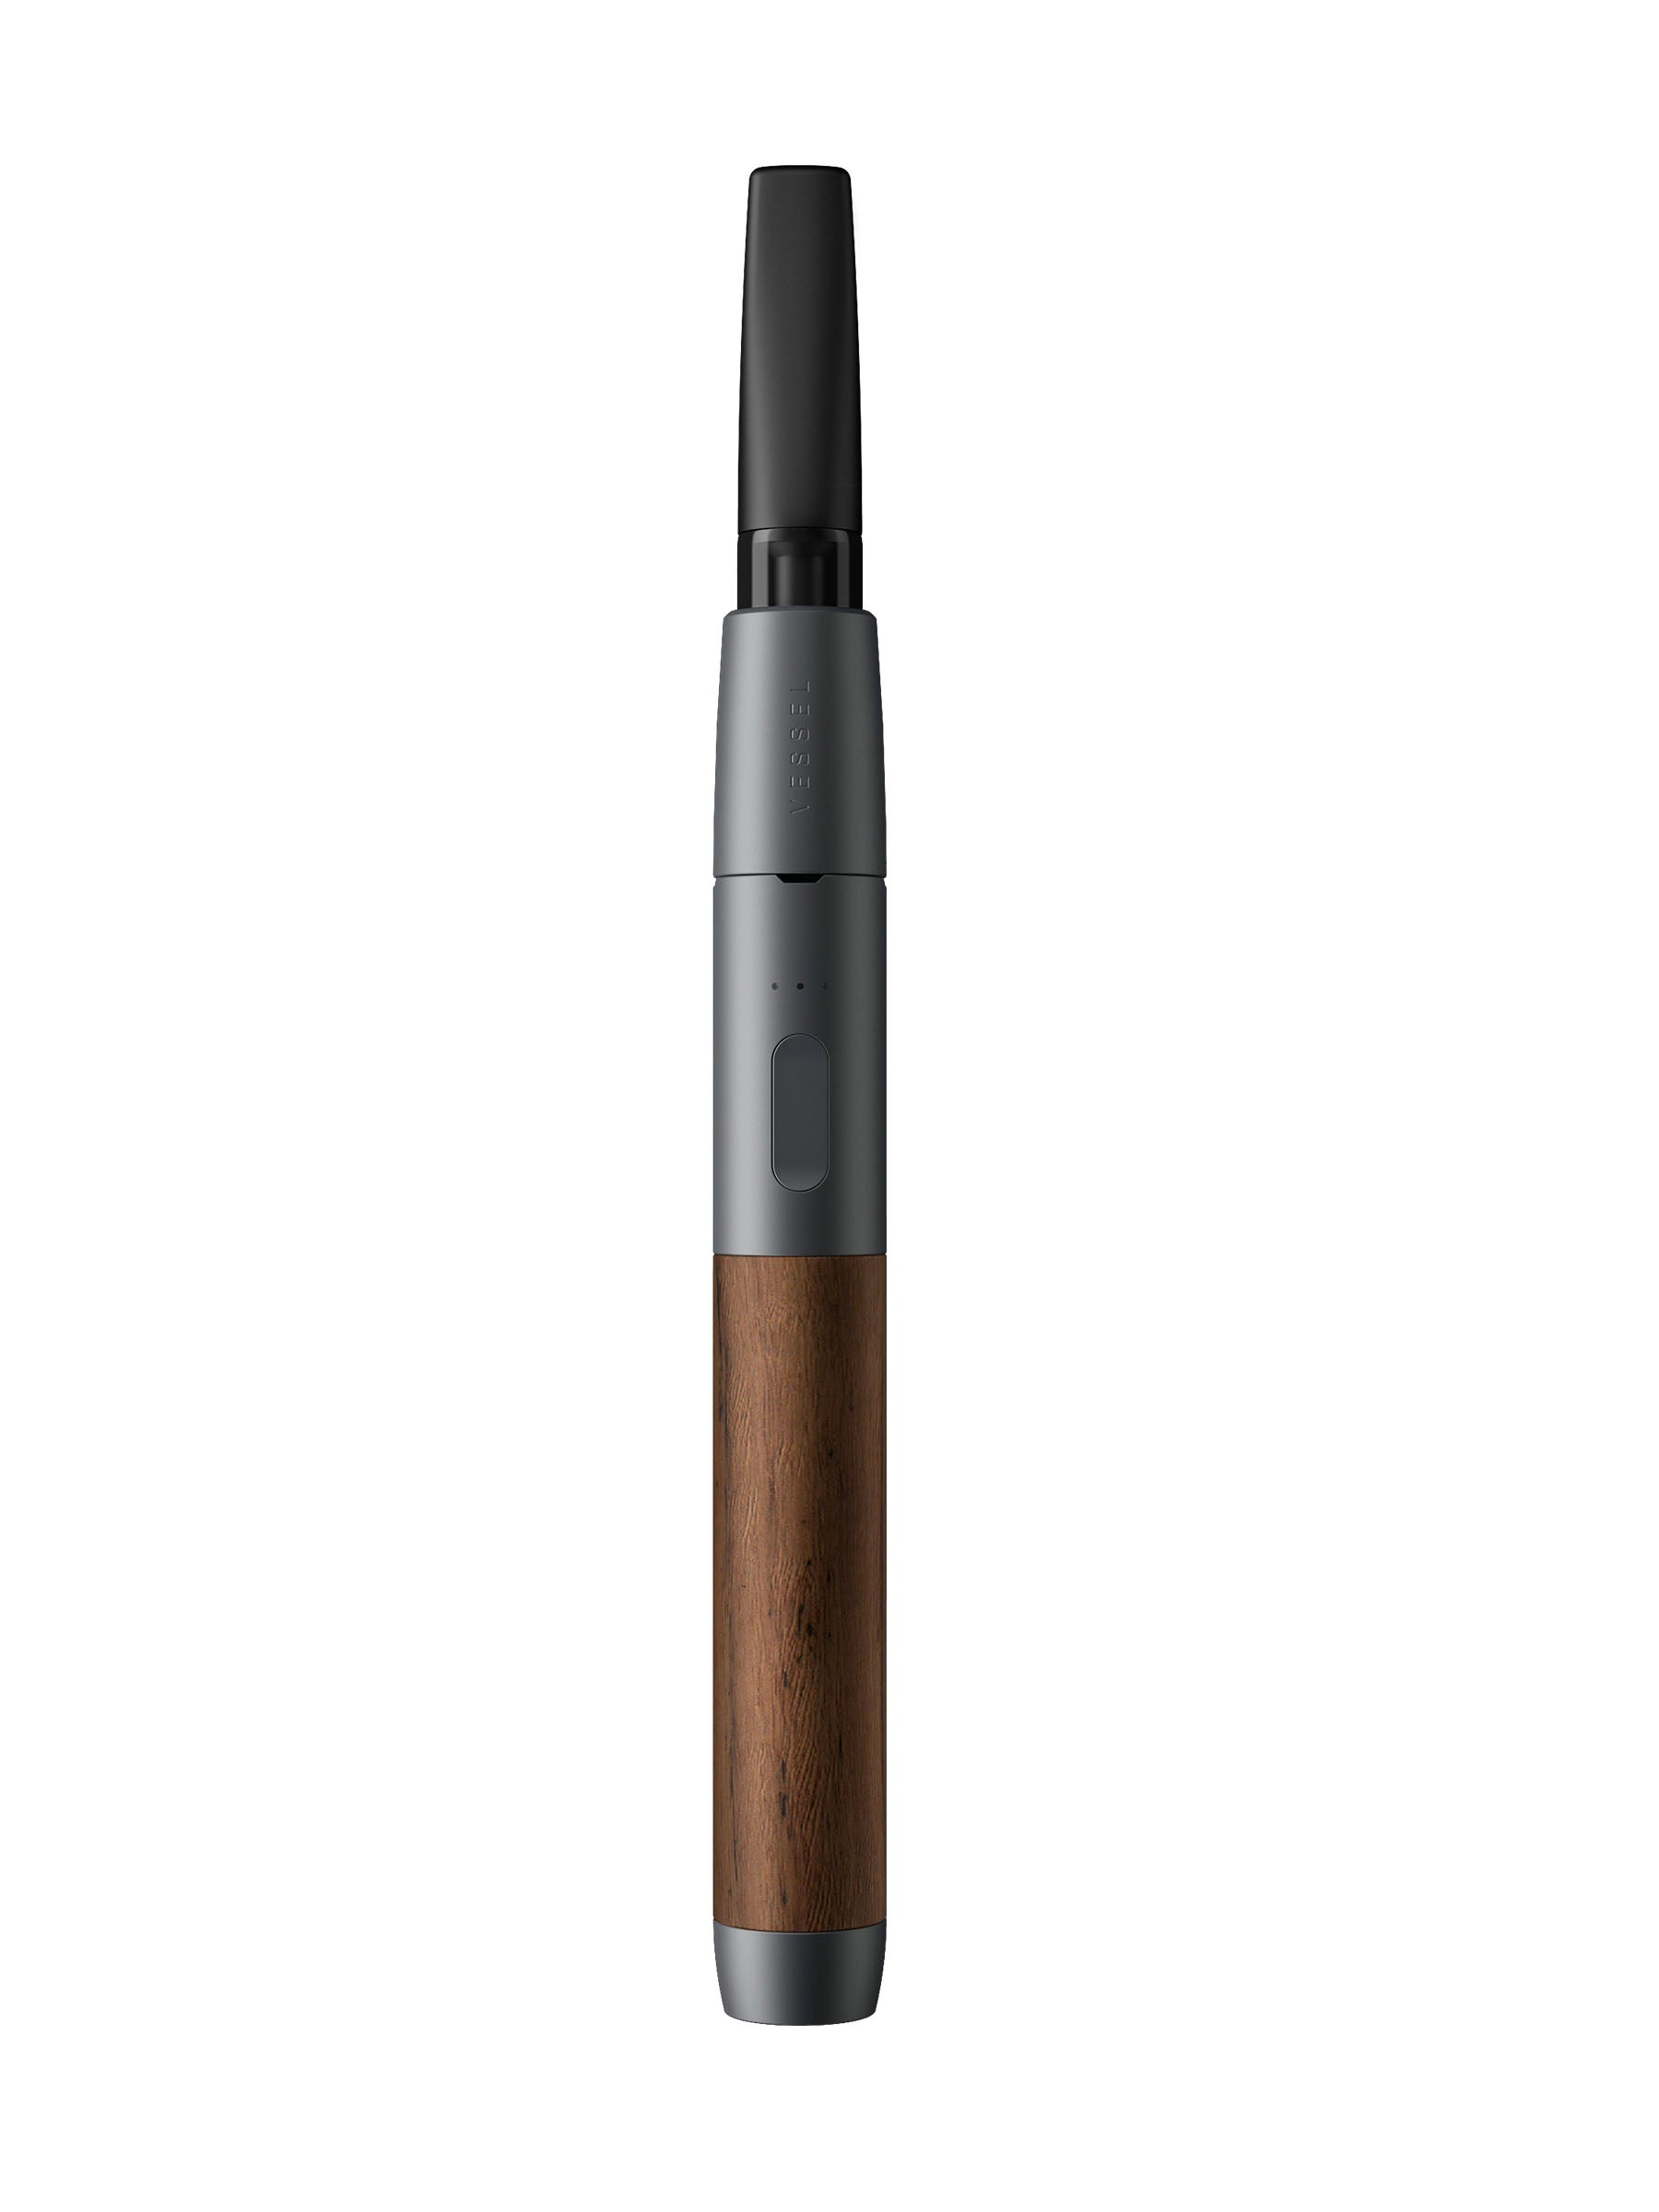 Vessel Wood Series Vape Pen